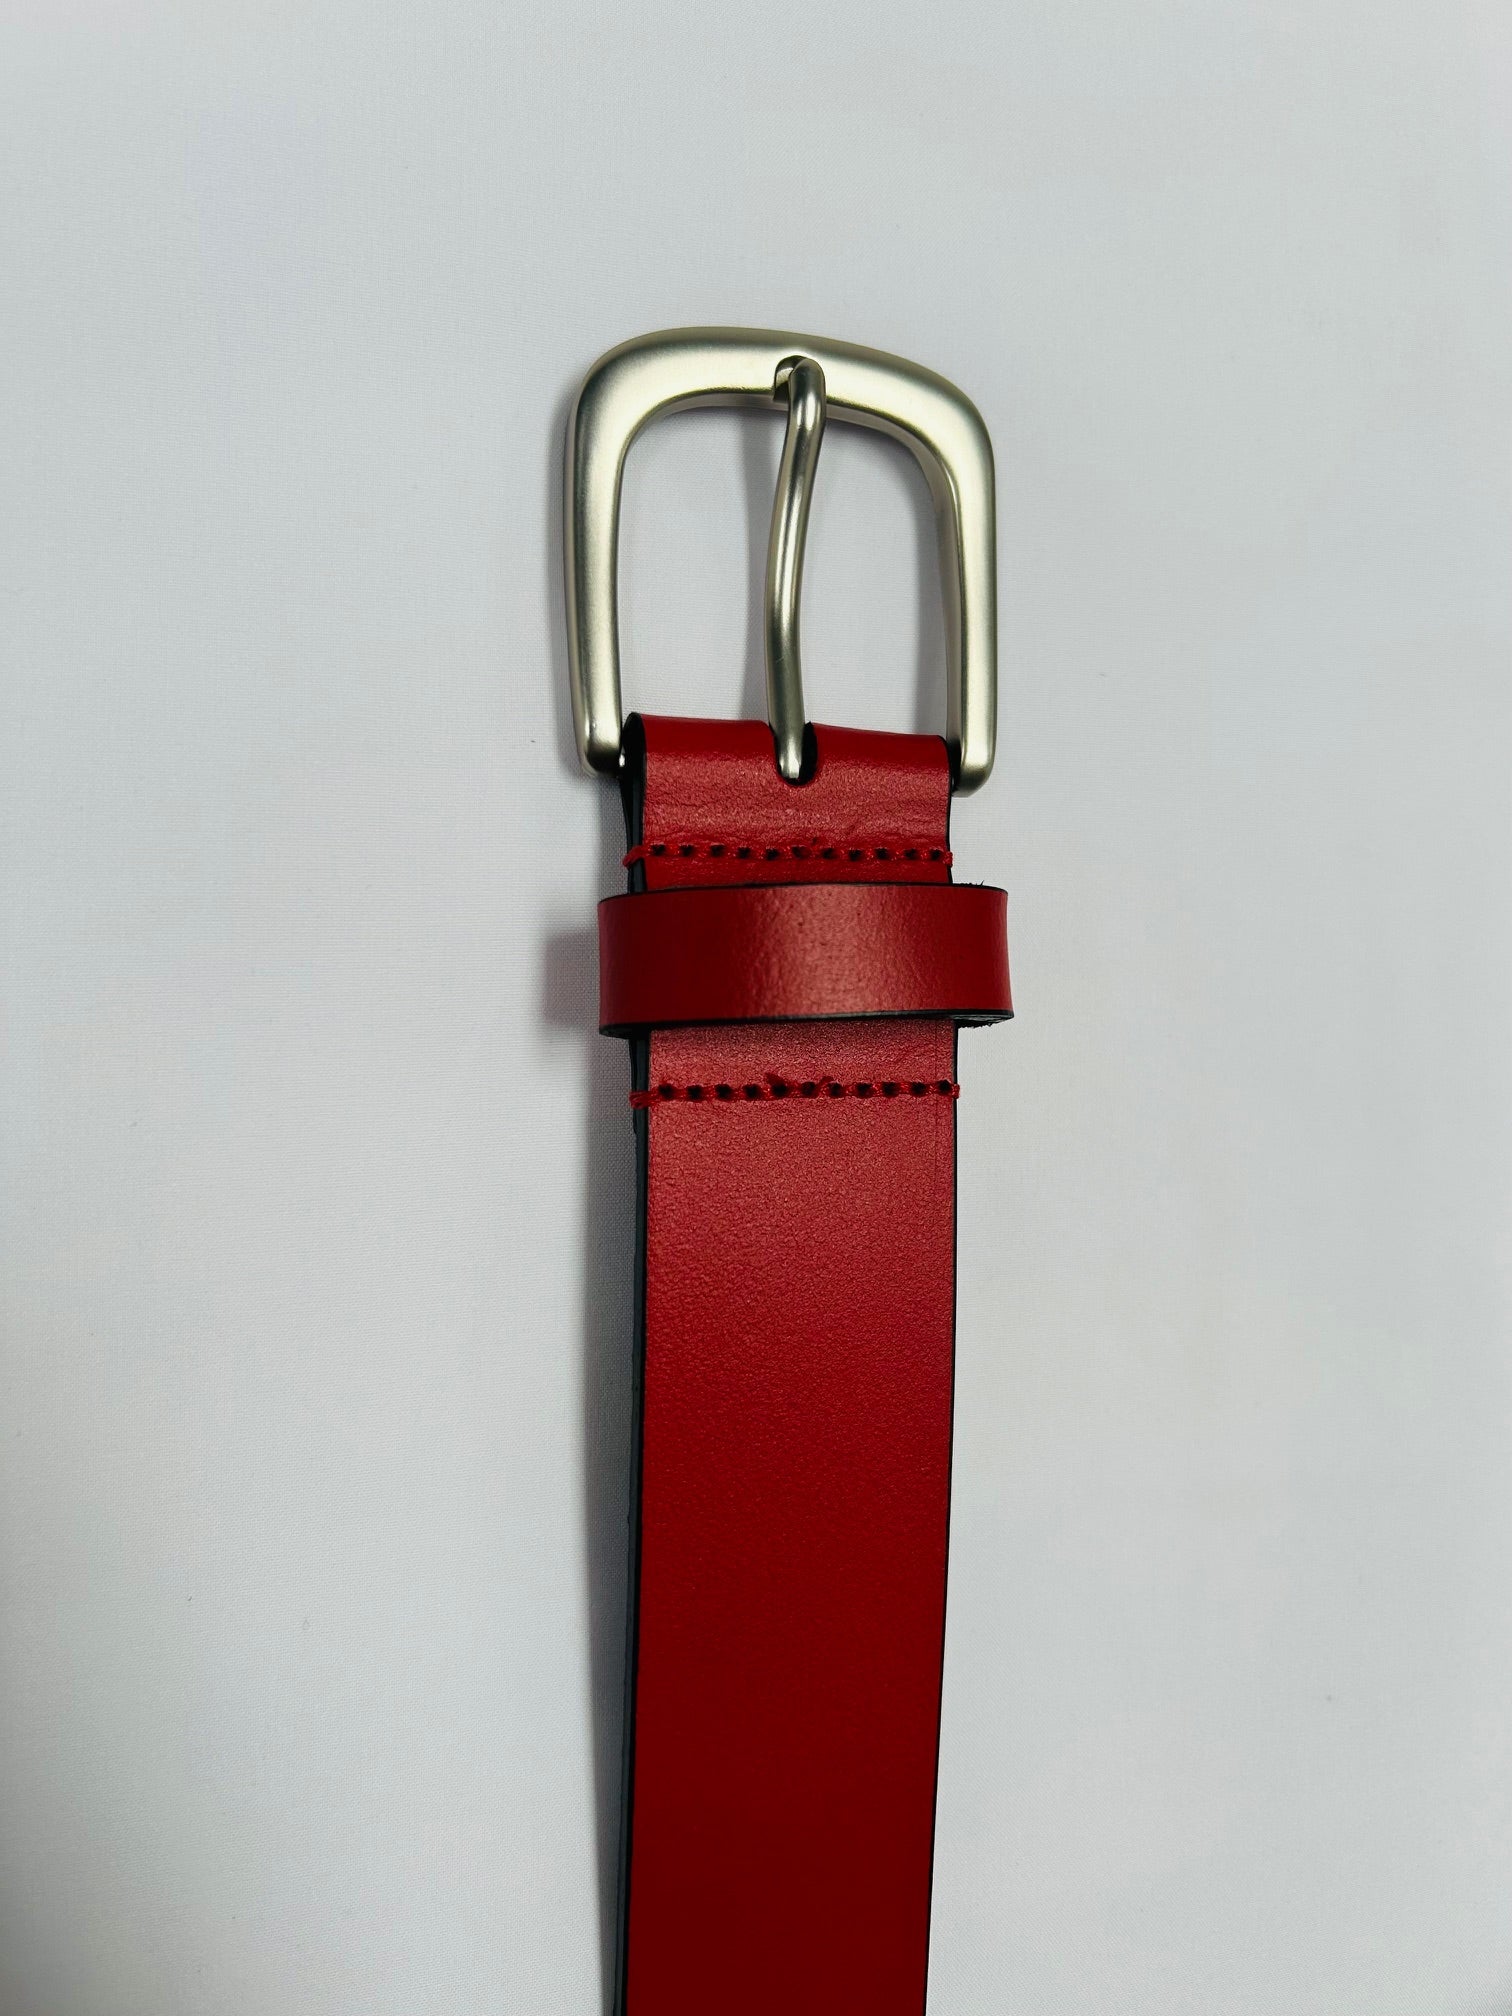 WORLD 24 Coloured Leather Belt